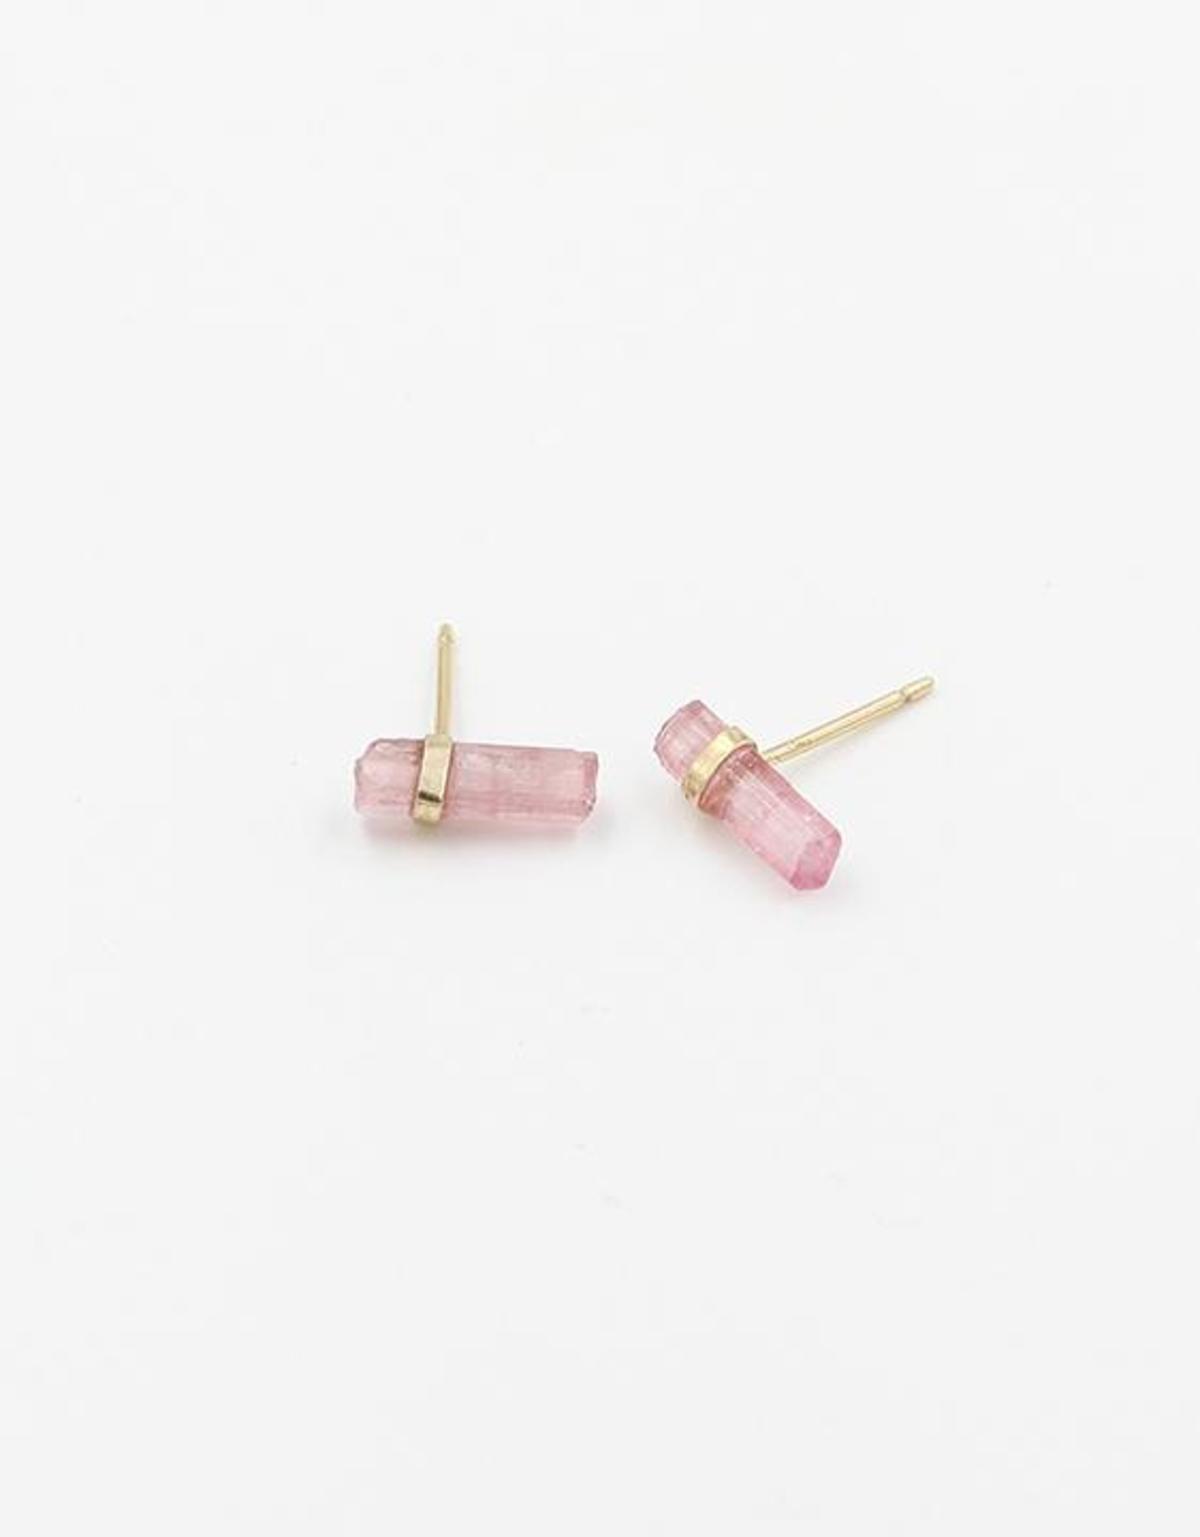 Sweetly precious Tourmaline Crystal Jené Despain Pink Nova Studs handmade in NYC, $90 @garmentory.com